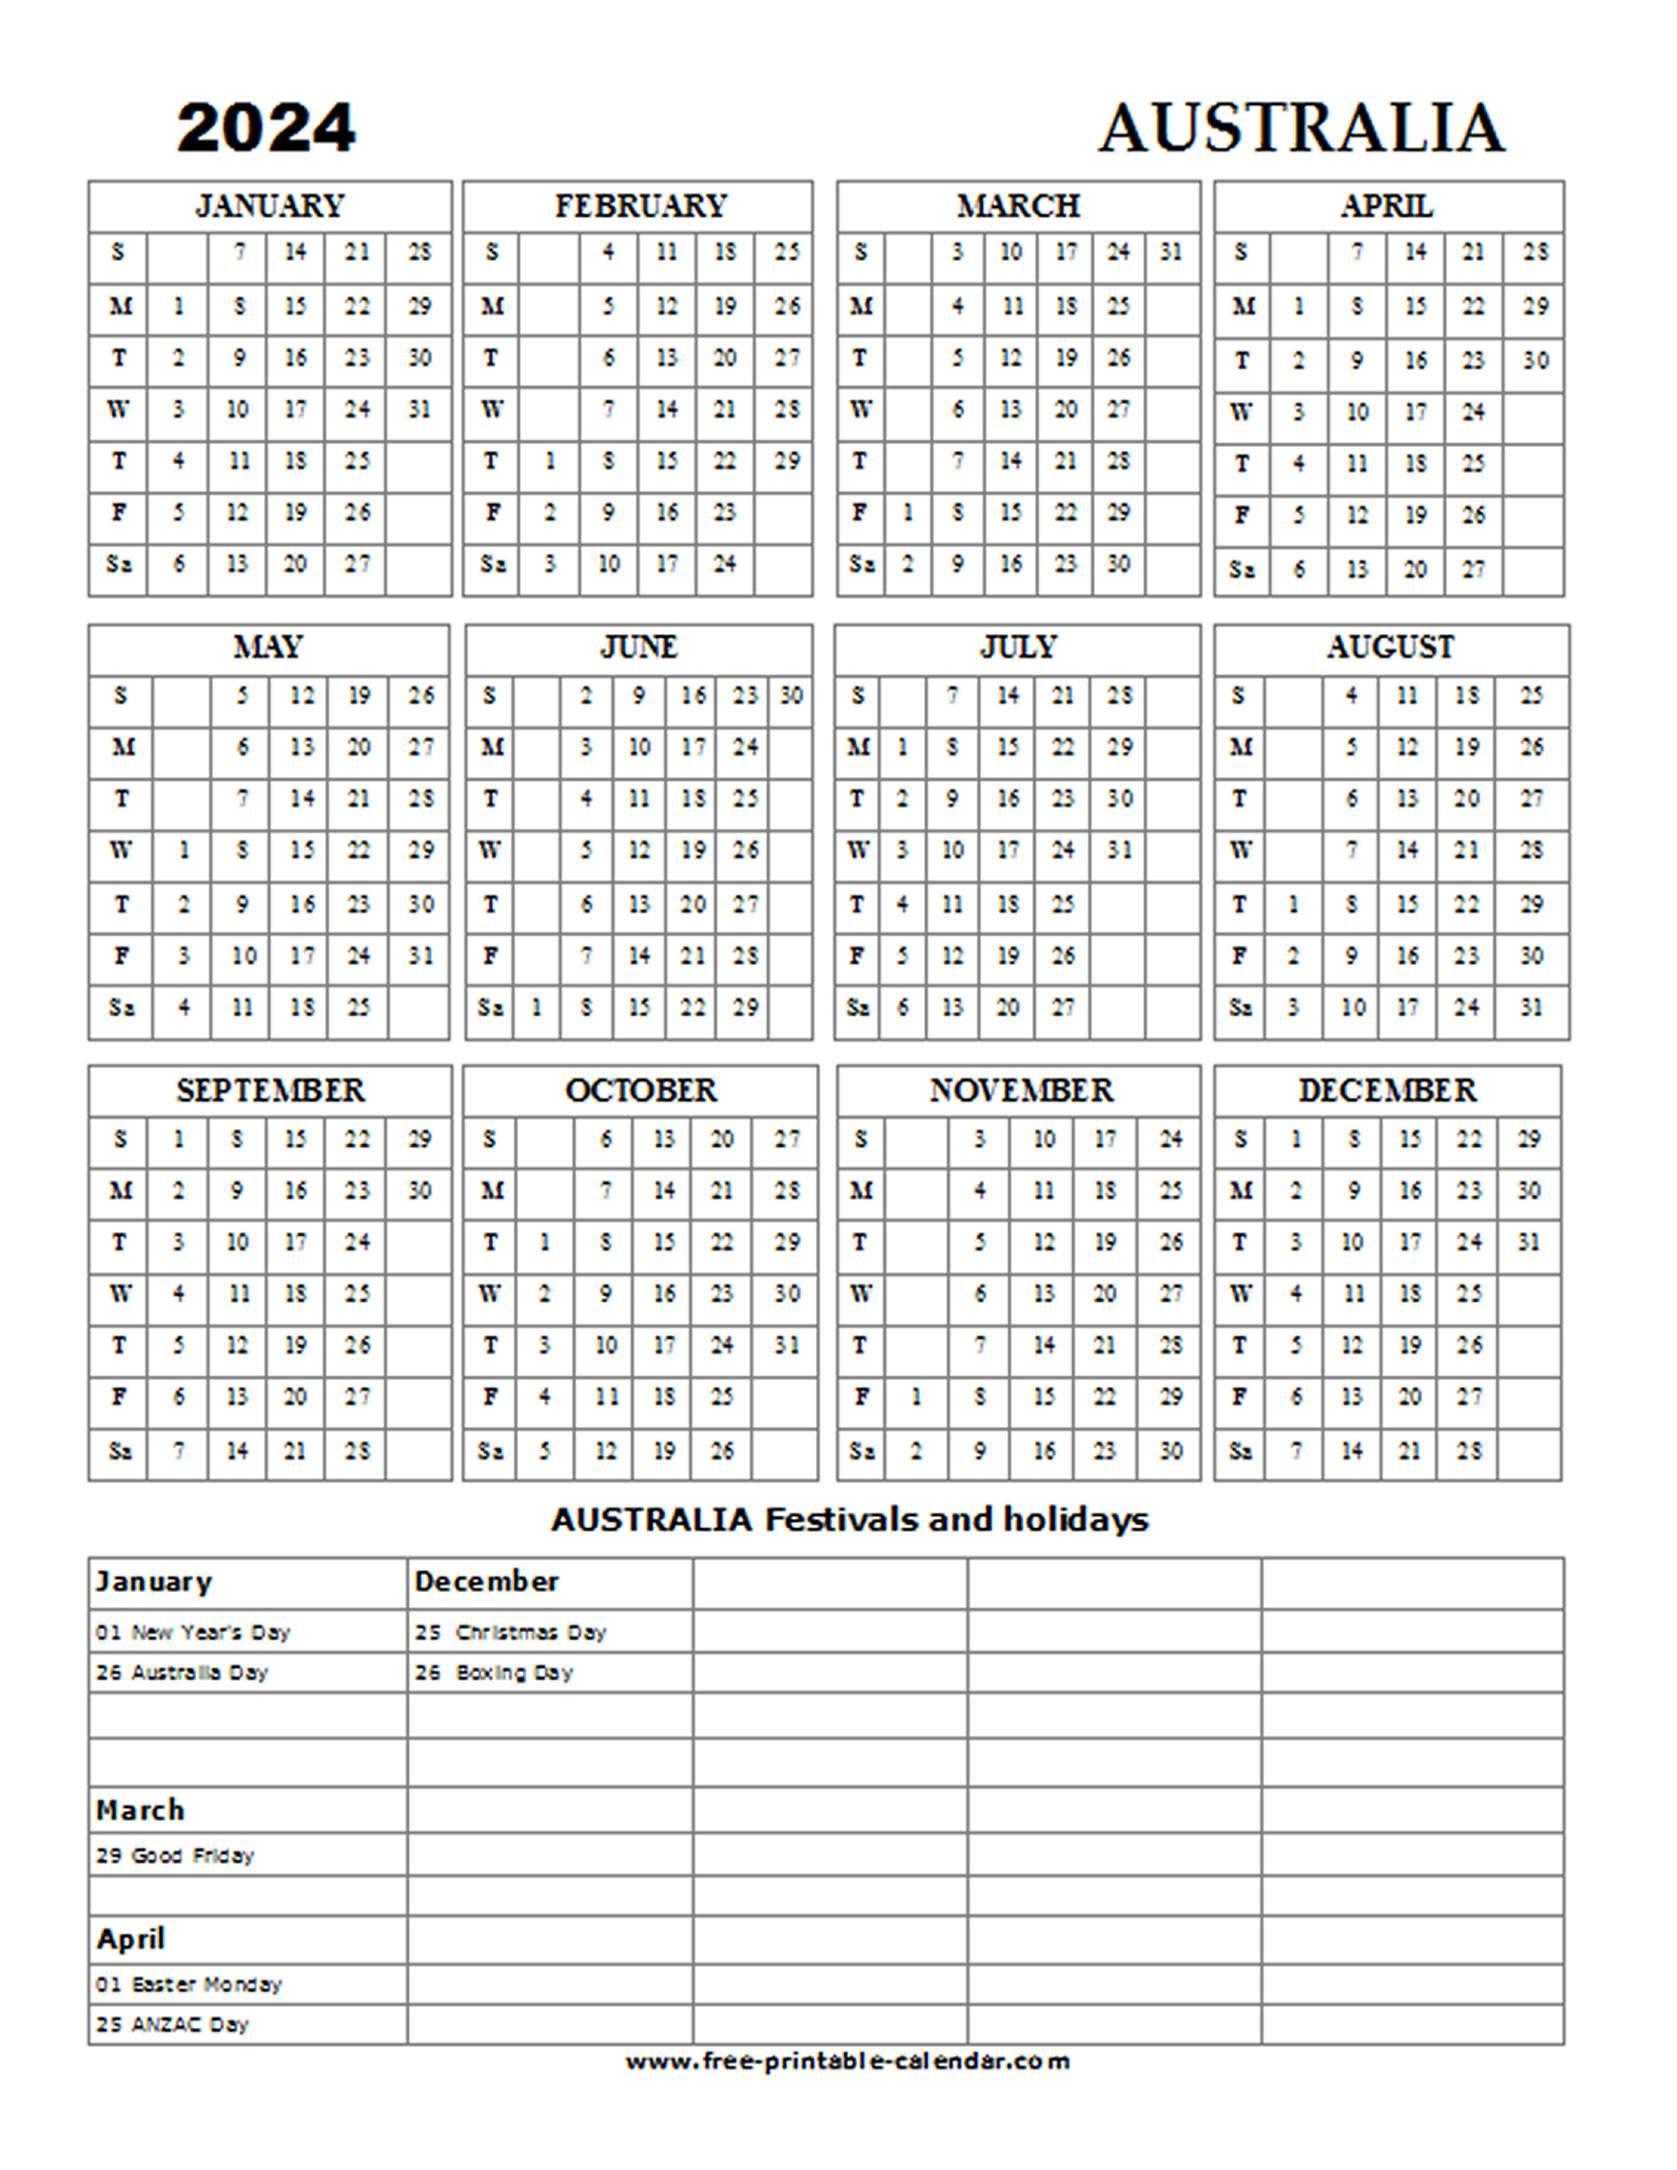 2024 Australia Holiday Calendar - Free-Printable-Calendar | Printable Calendar 2024 Australia